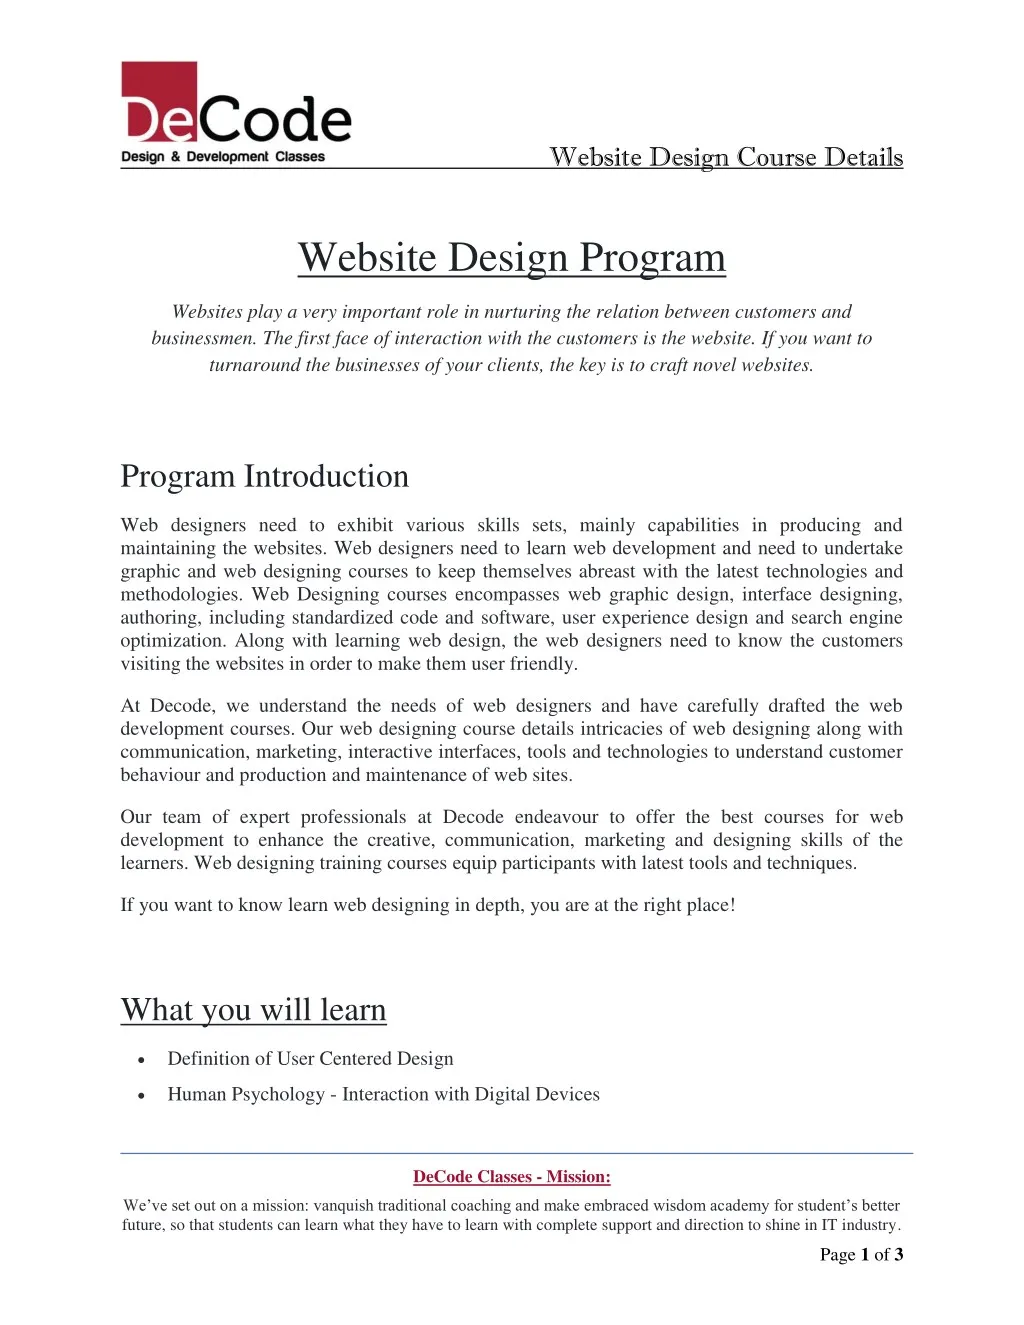 website design course details